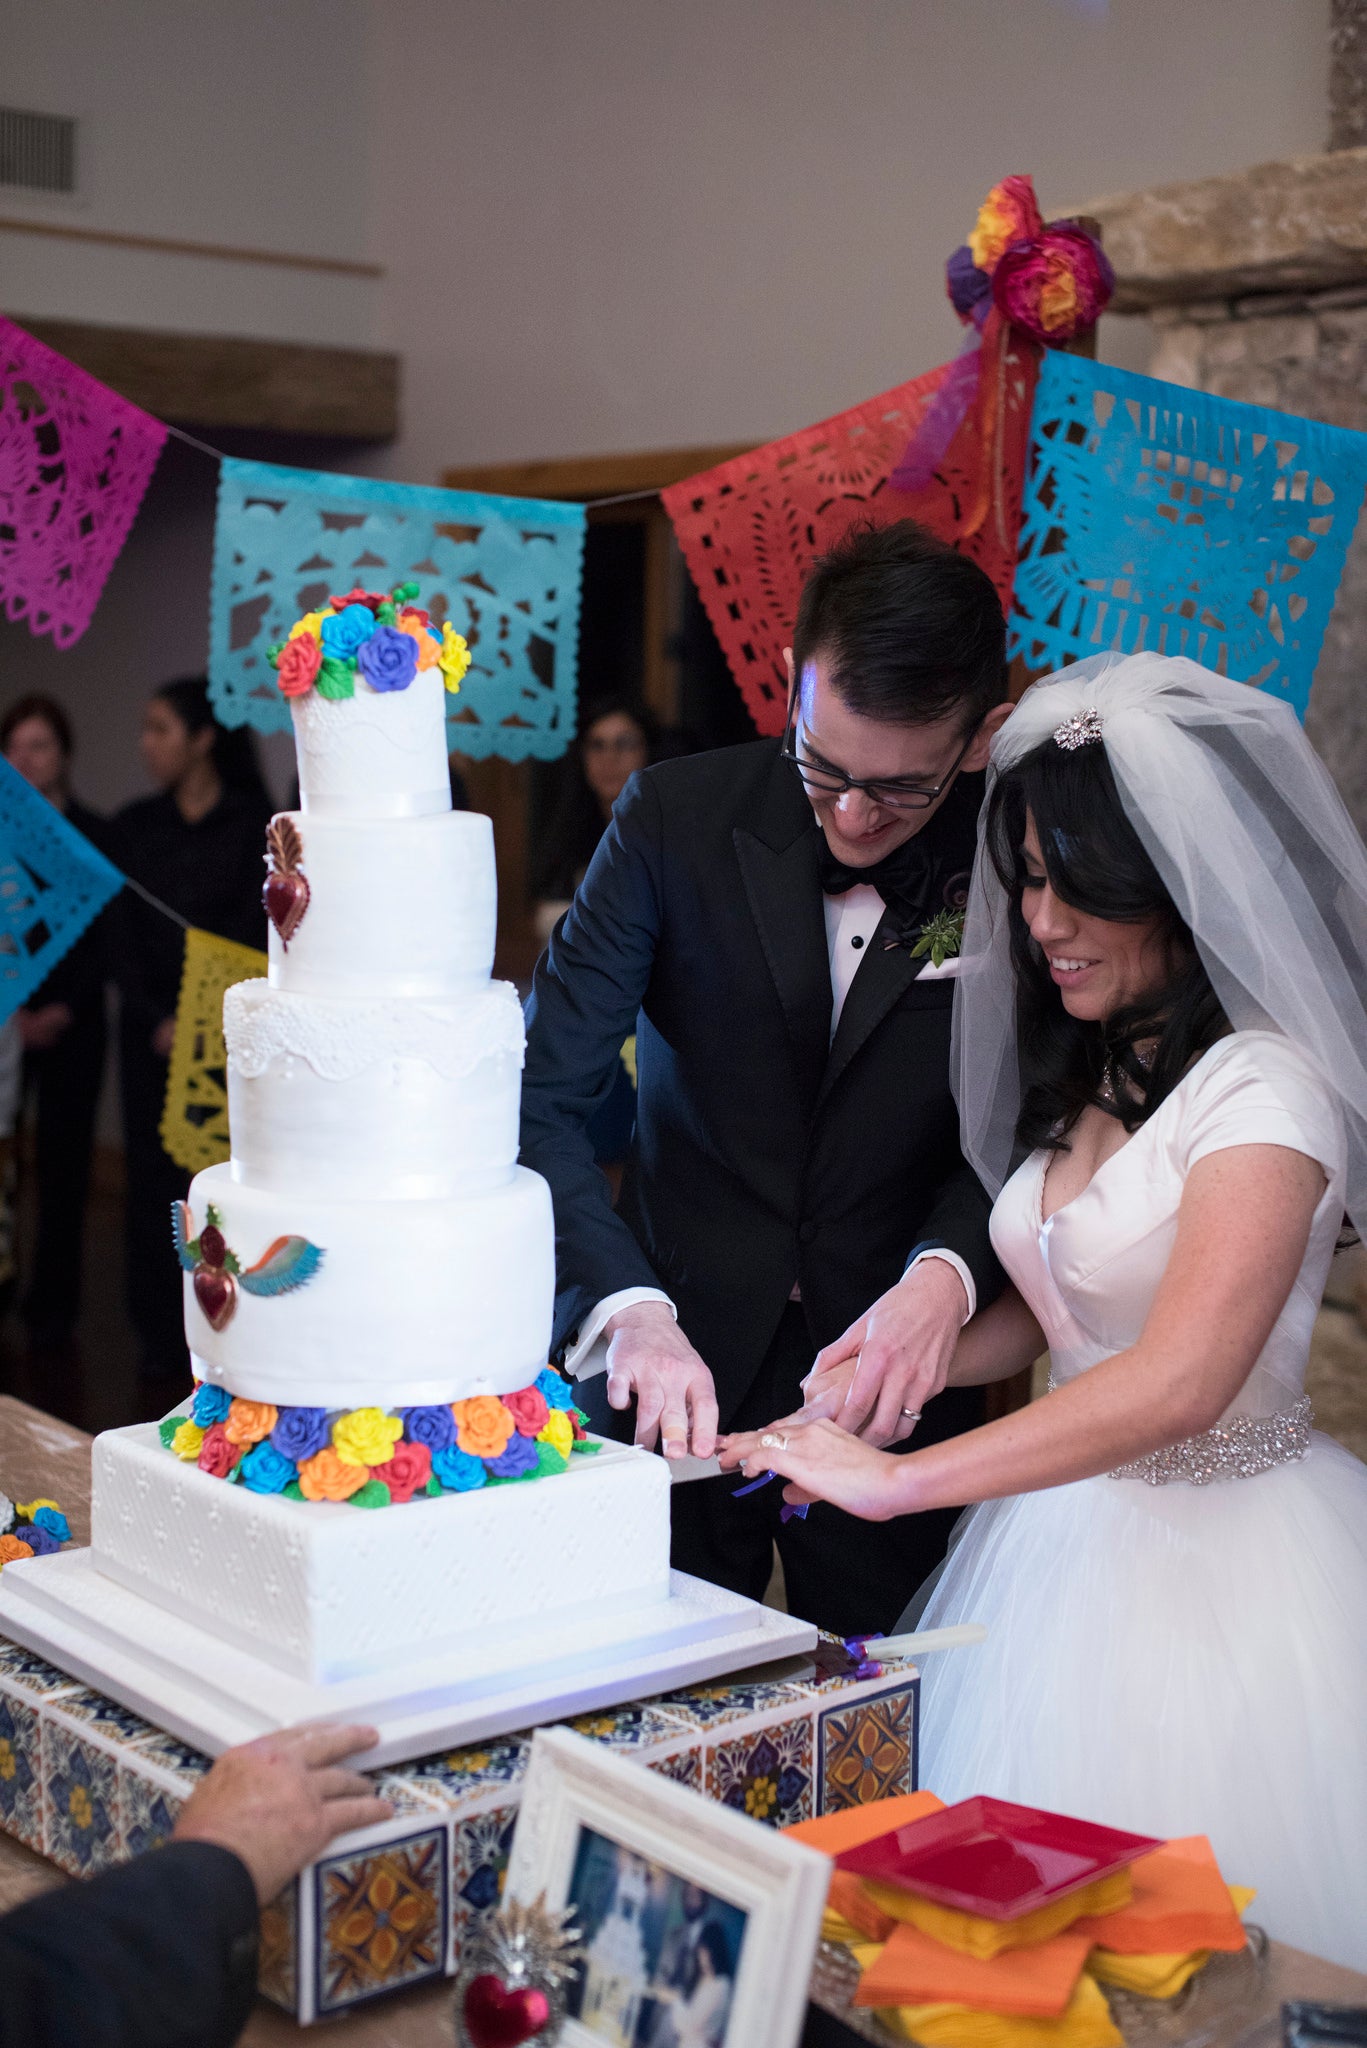 Wedding Amor Papel Picado Garlands - Mexican Fiesta decorations celebrating Love